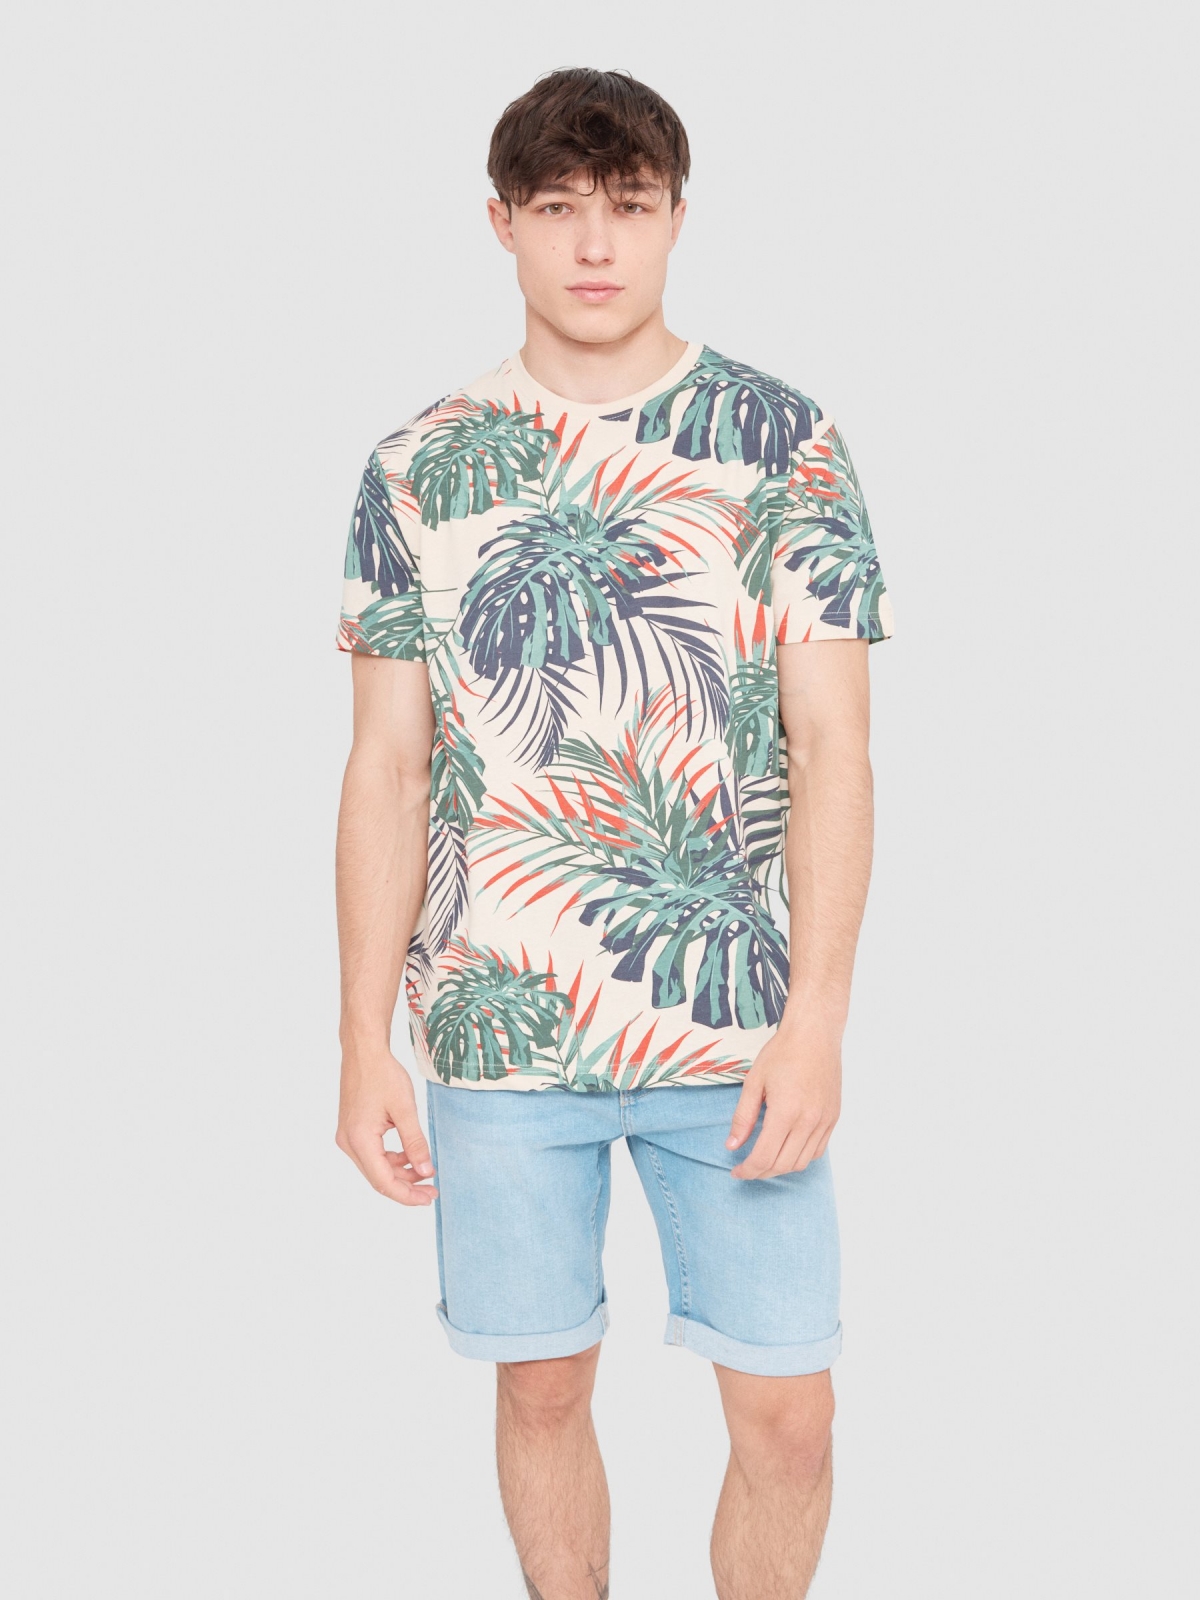 Camiseta tropical hojas arena vista media frontal